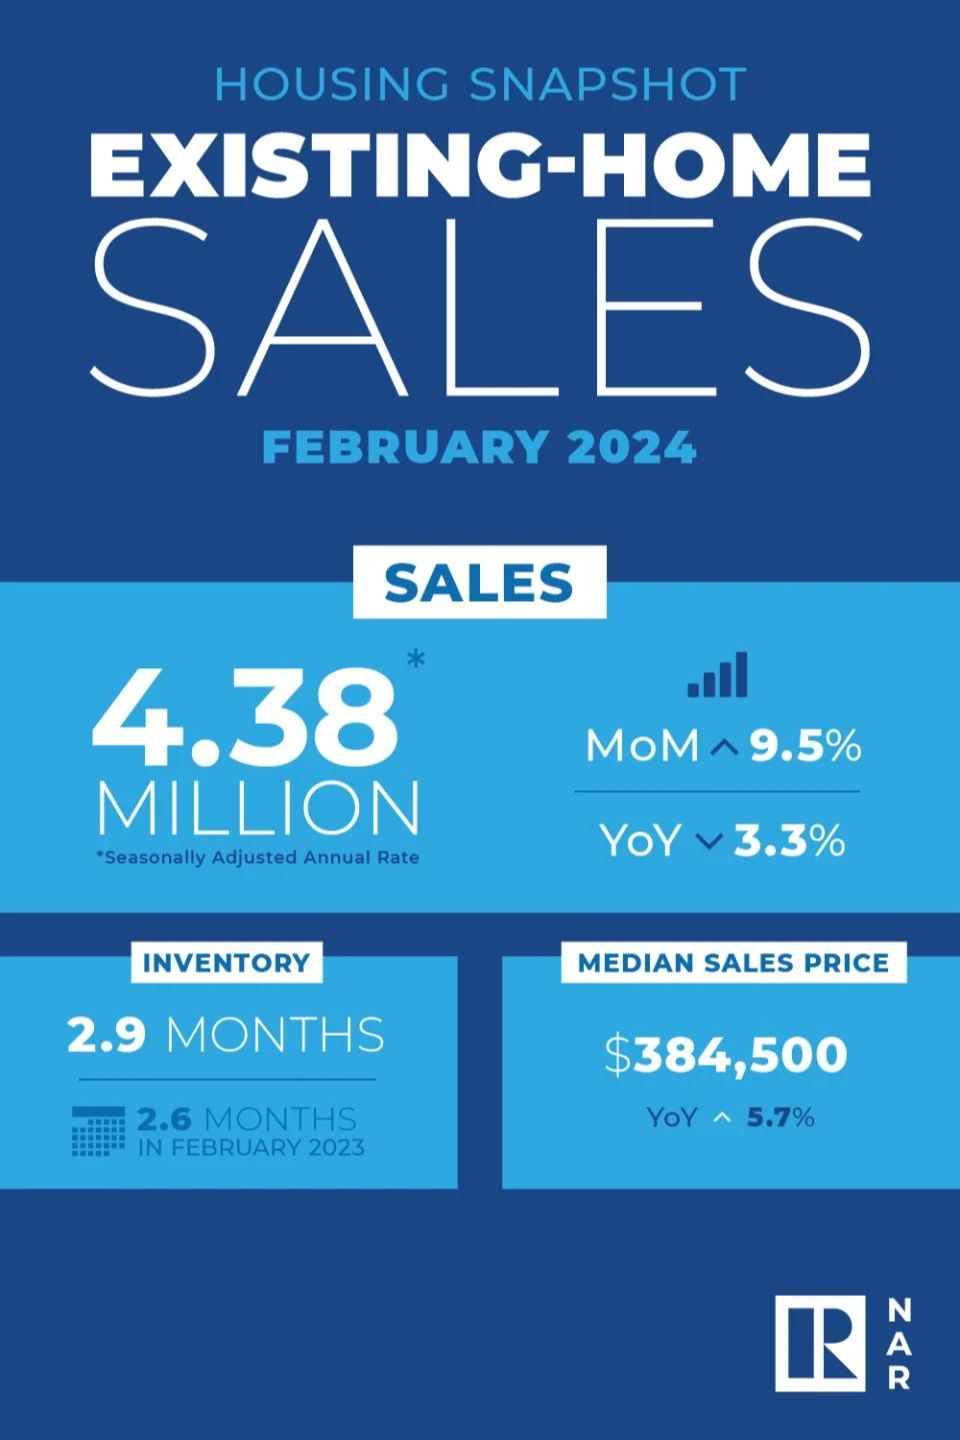 Feb 2024 Home Sales Data - Housing Snapshot Infographic